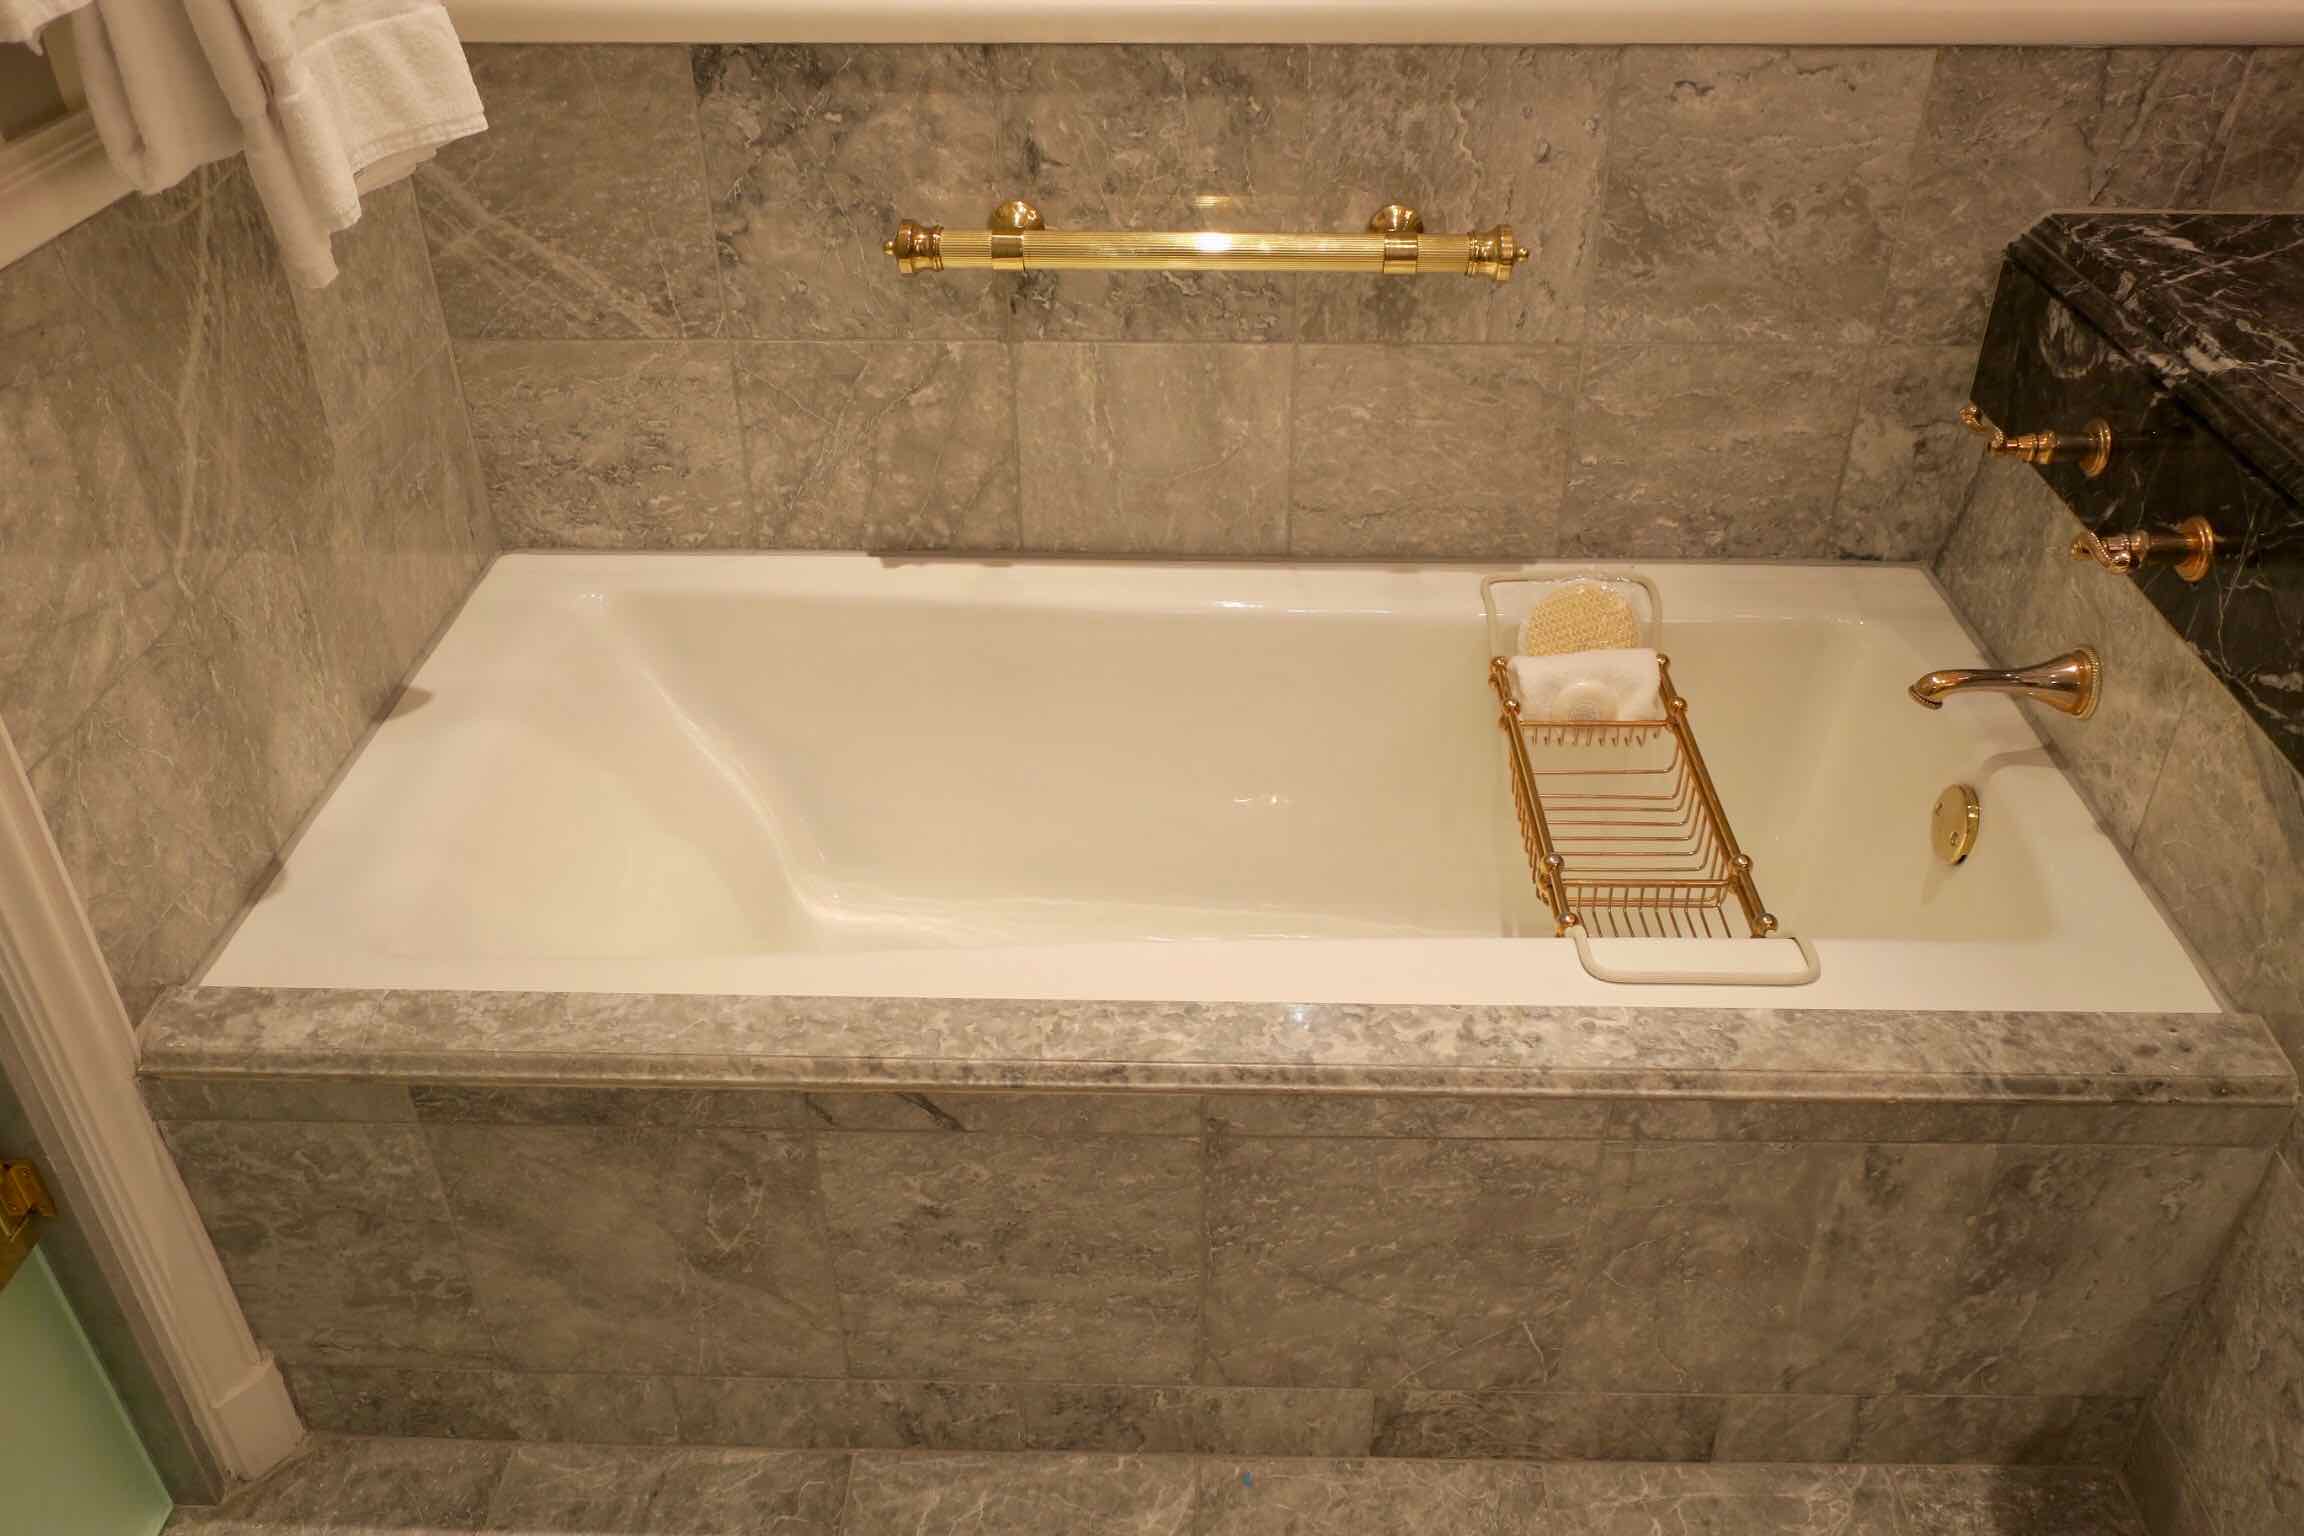 The St. Regis New York Superior Room bathtub